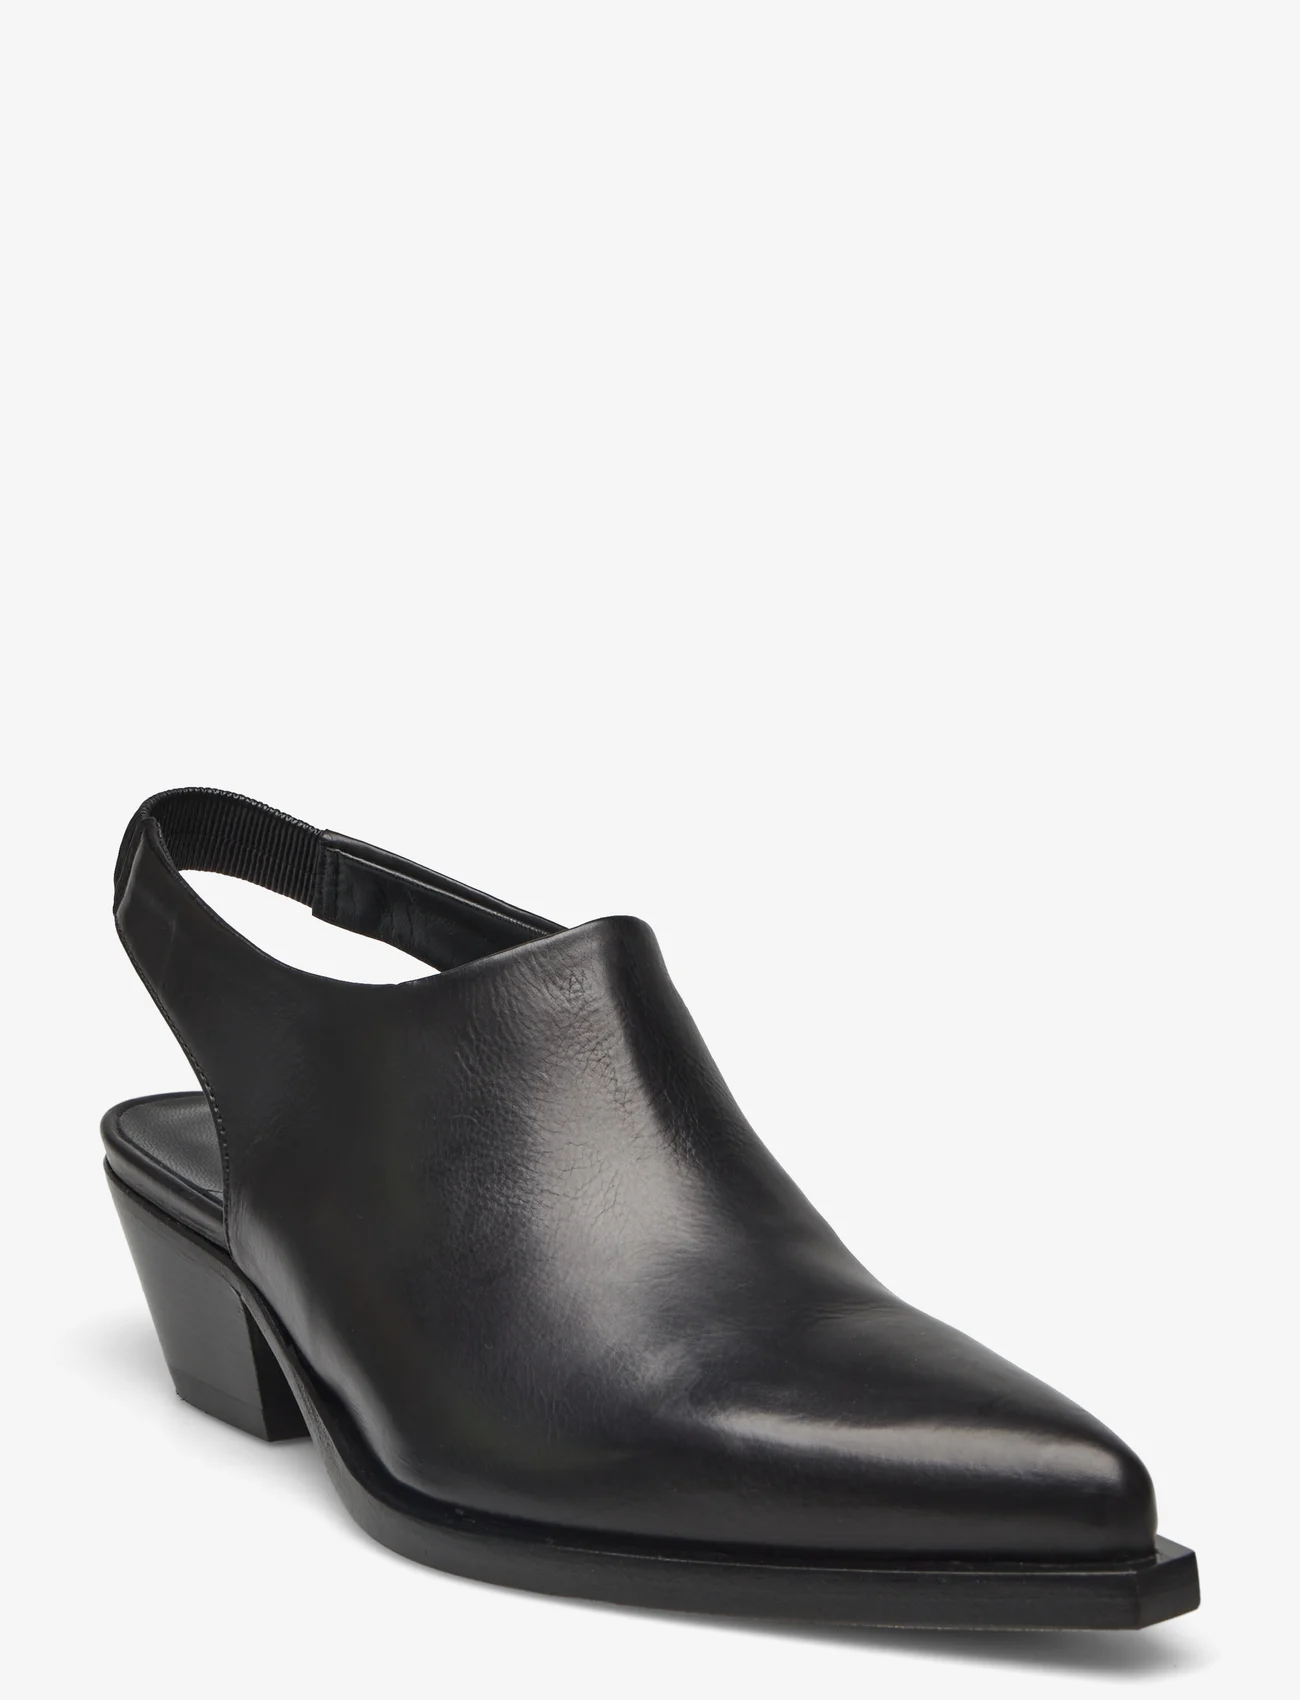 Laura Bellariva - shoes - cowboy boots - black - 0